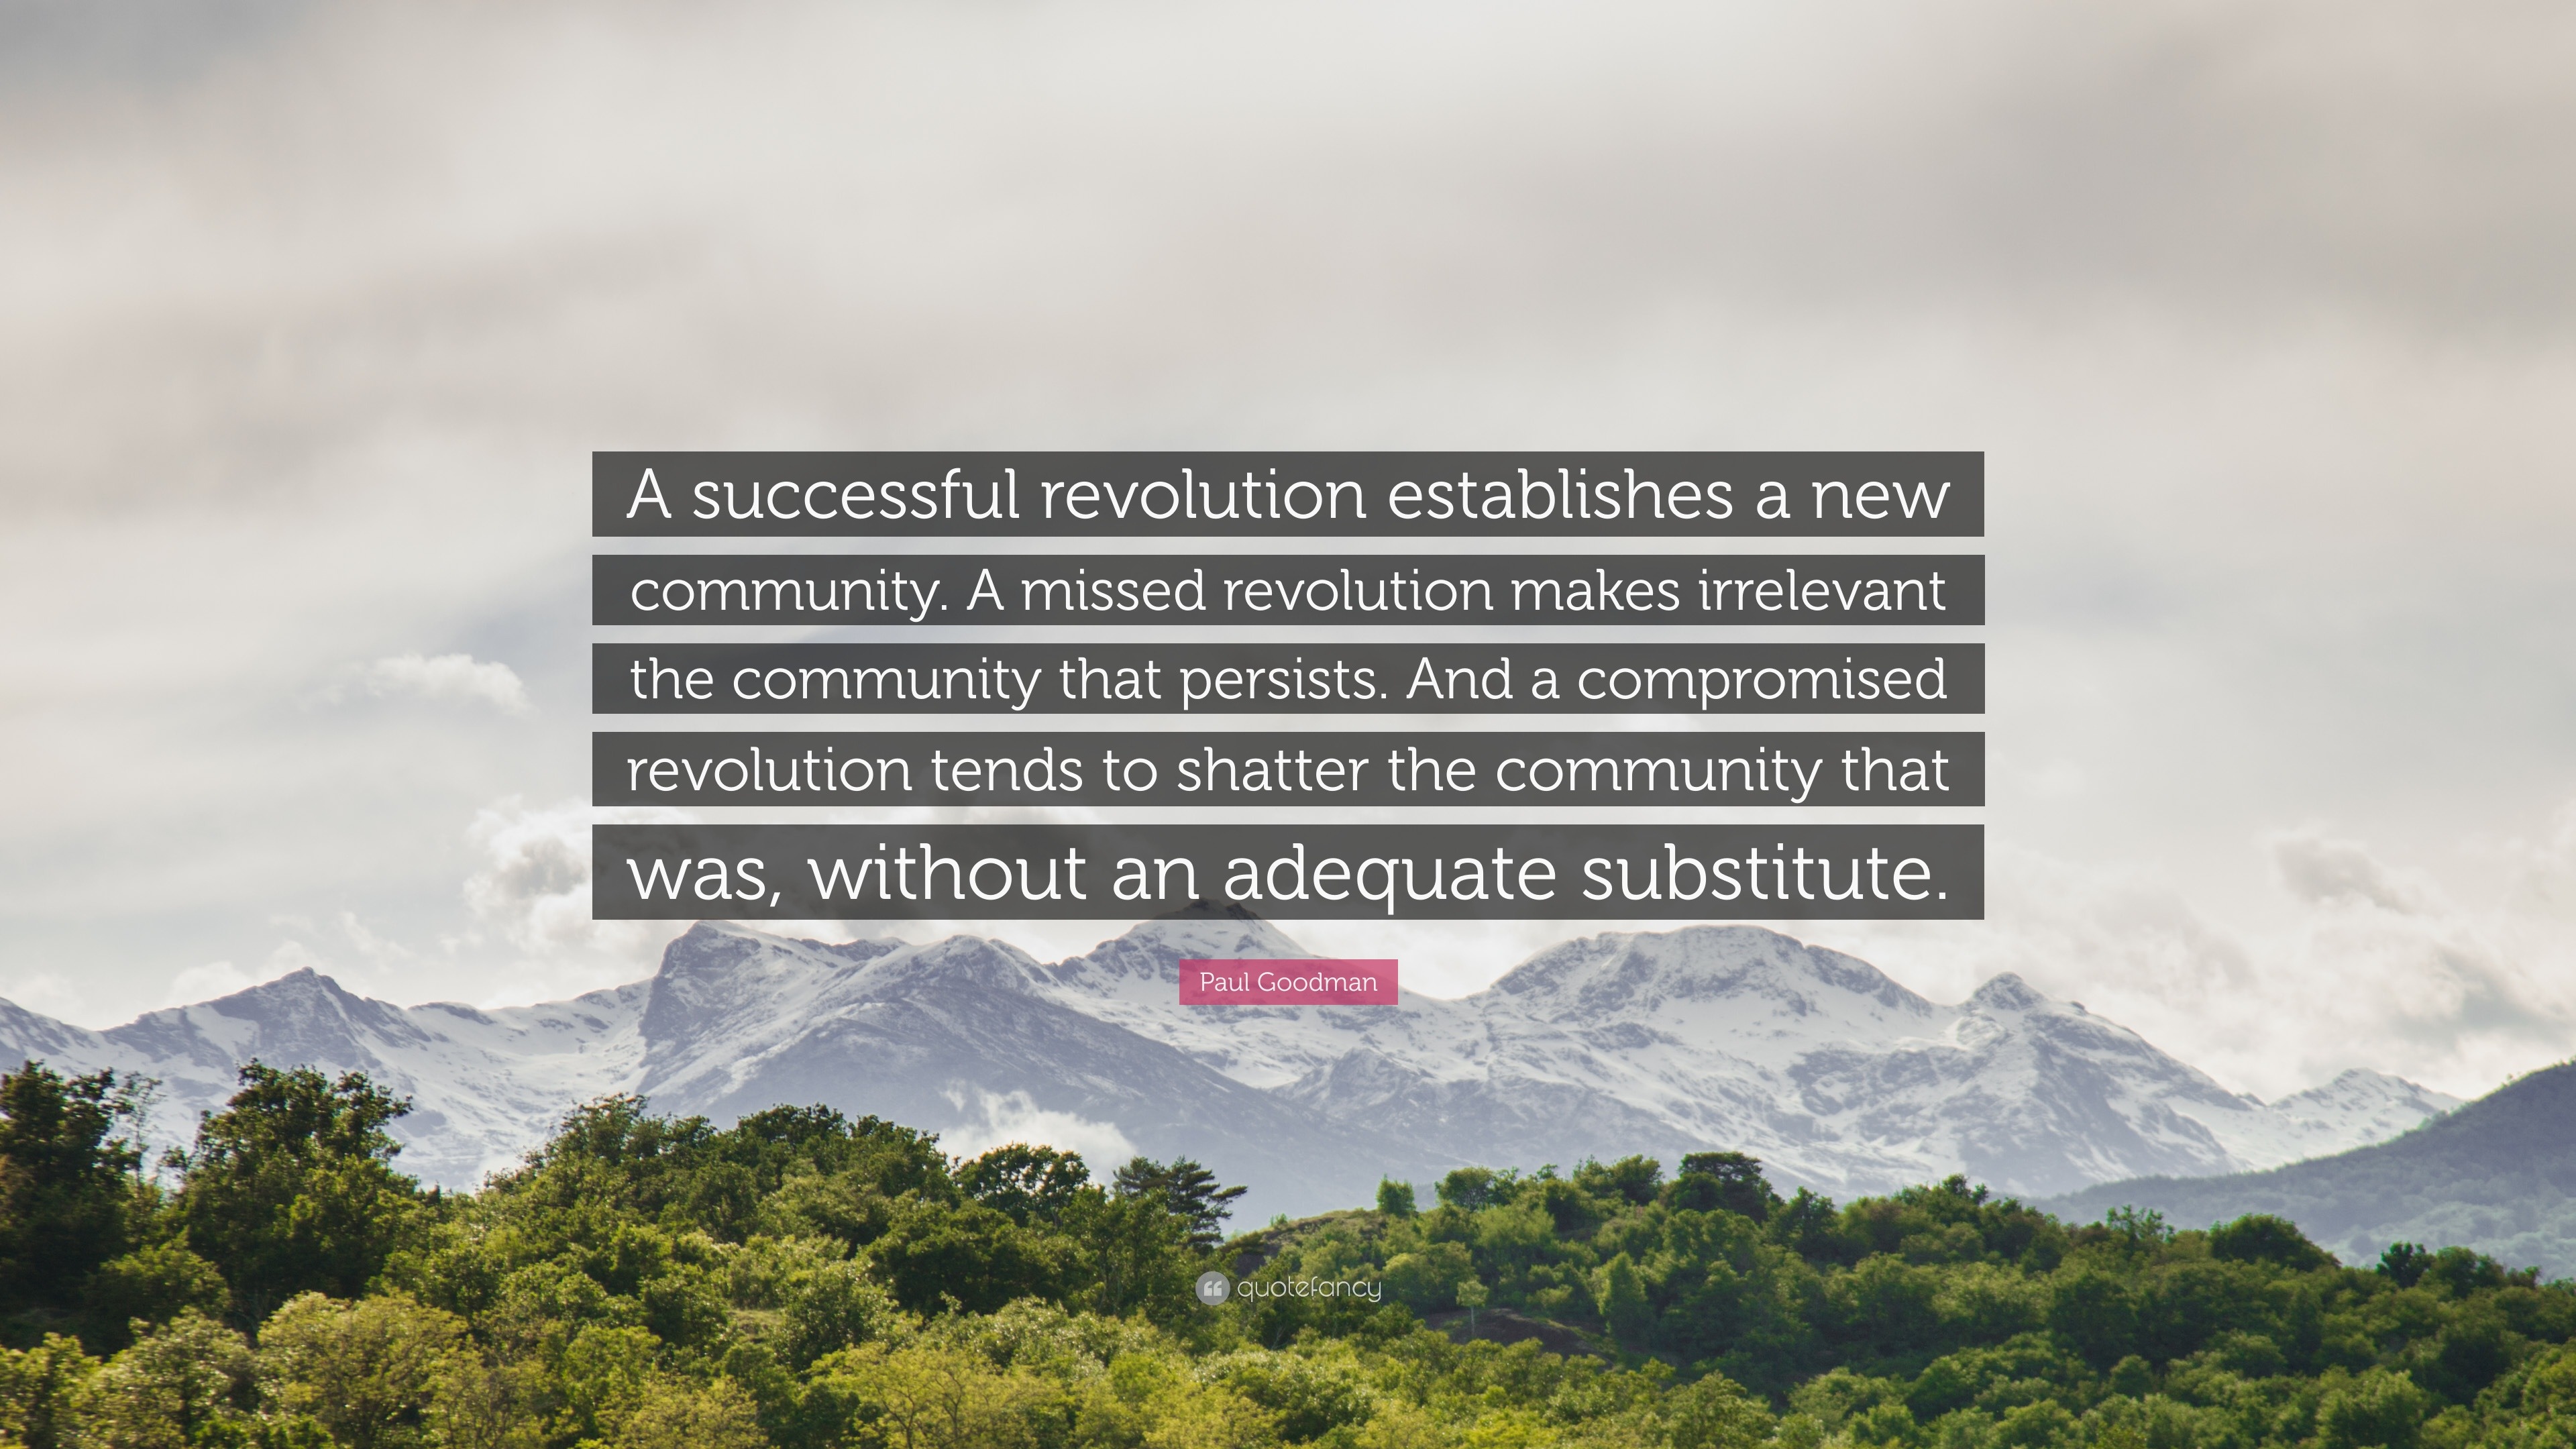 Paul Goodman Quote: “A successful revolution establishes a new